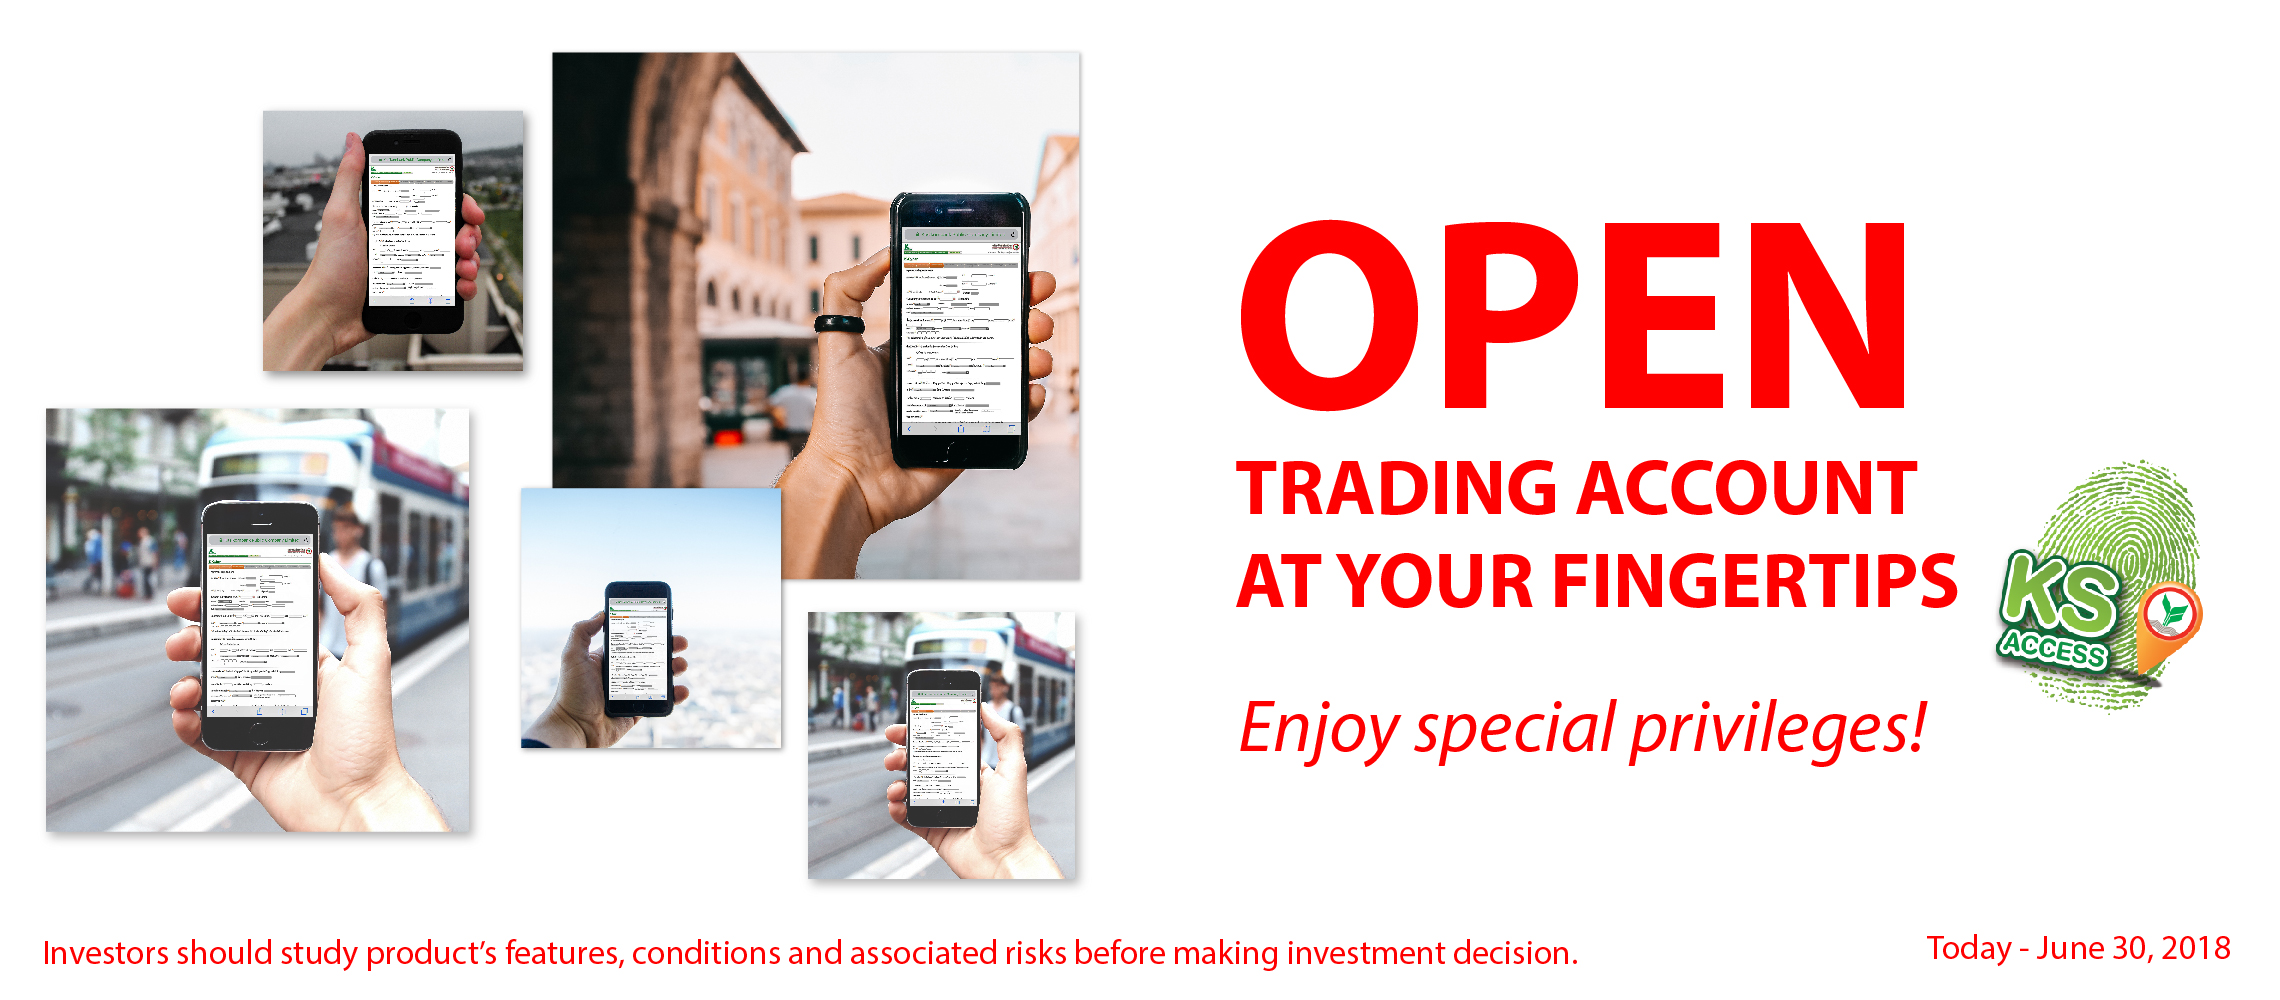 Open trading account at your fingertips!!! KASIKORNBANK